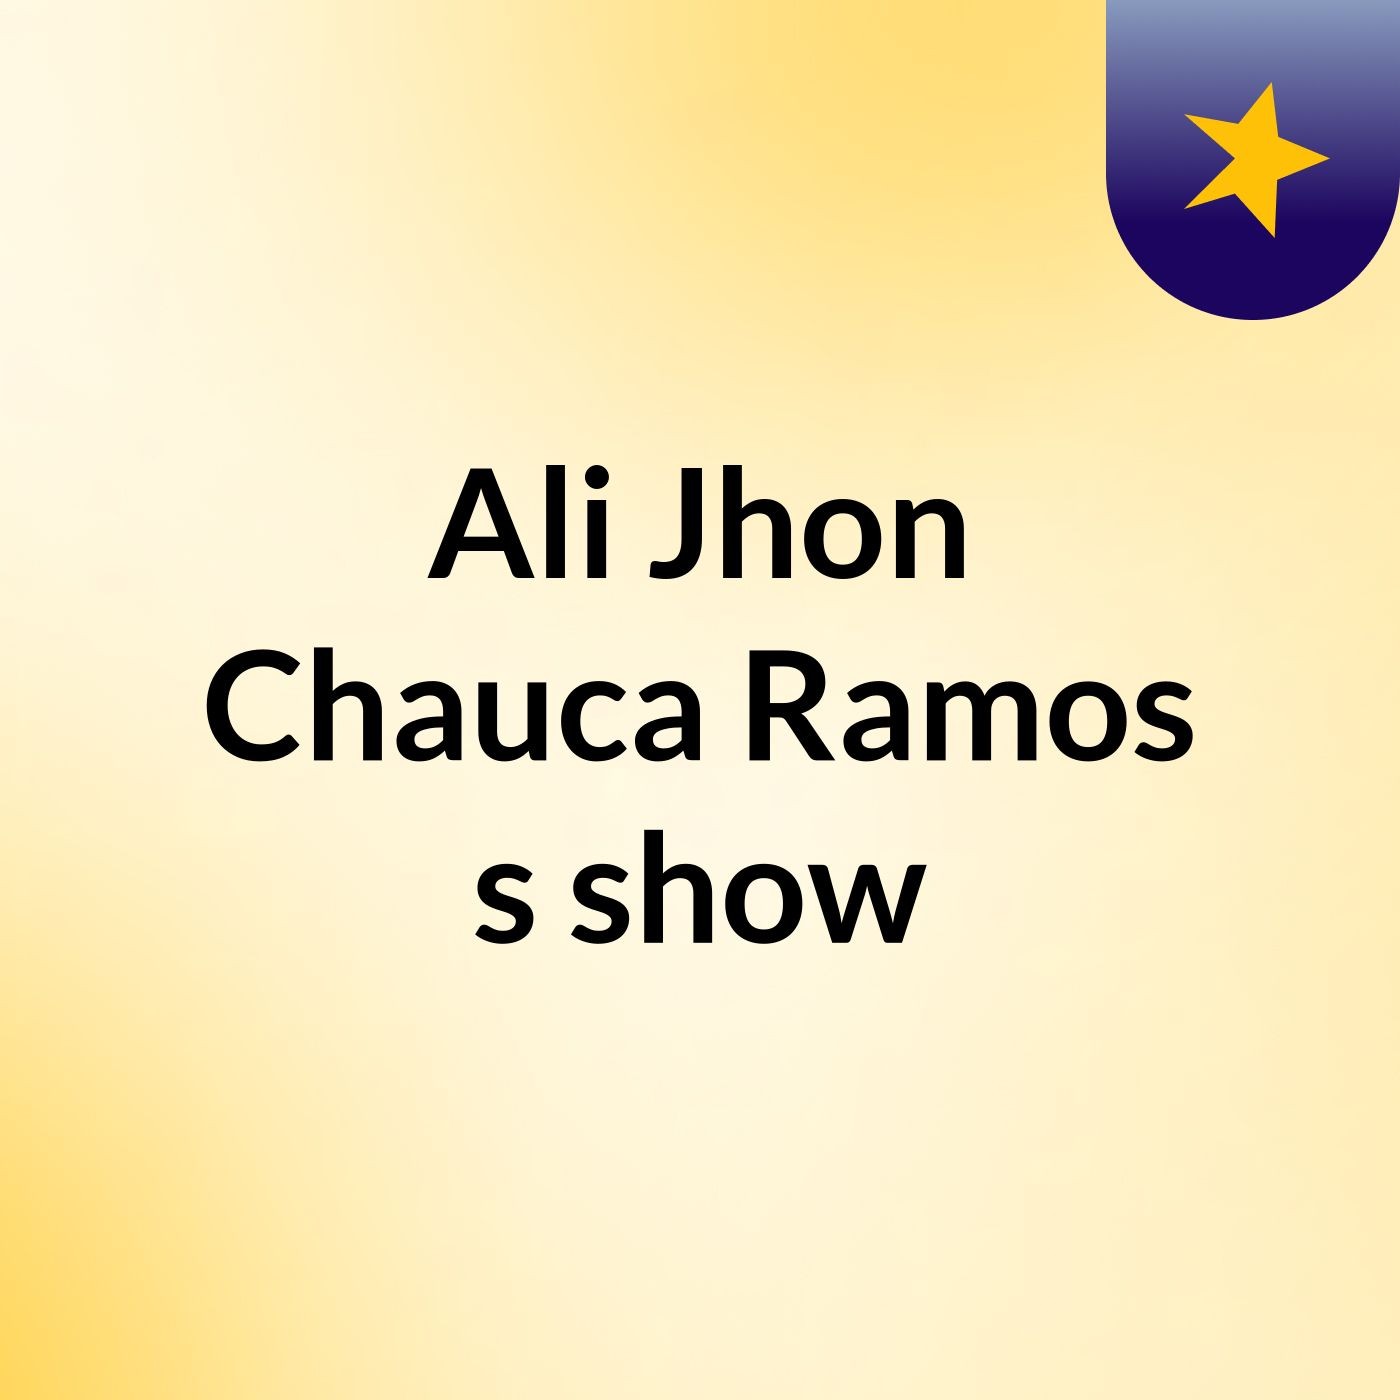 Ali Jhon Chauca Ramos's show